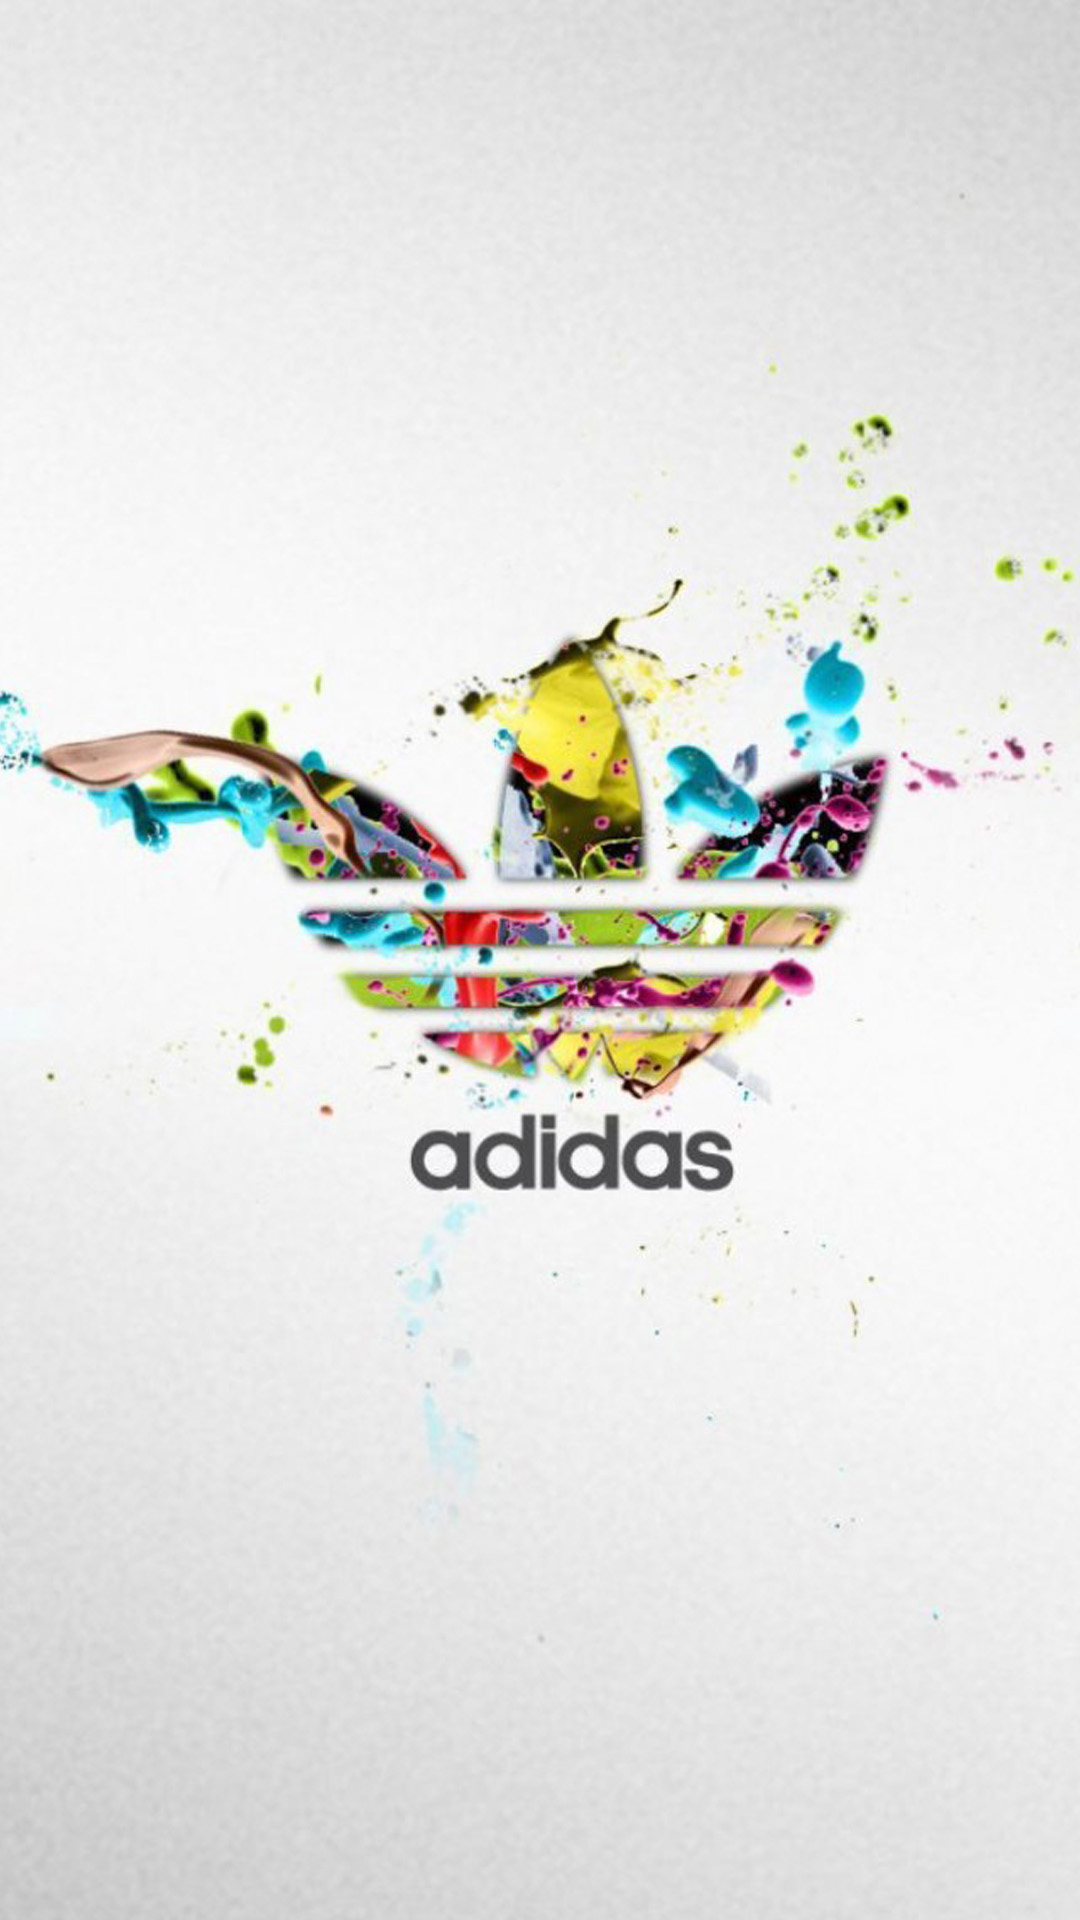 adidas wallpaper,graphic design,text,font,illustration,design